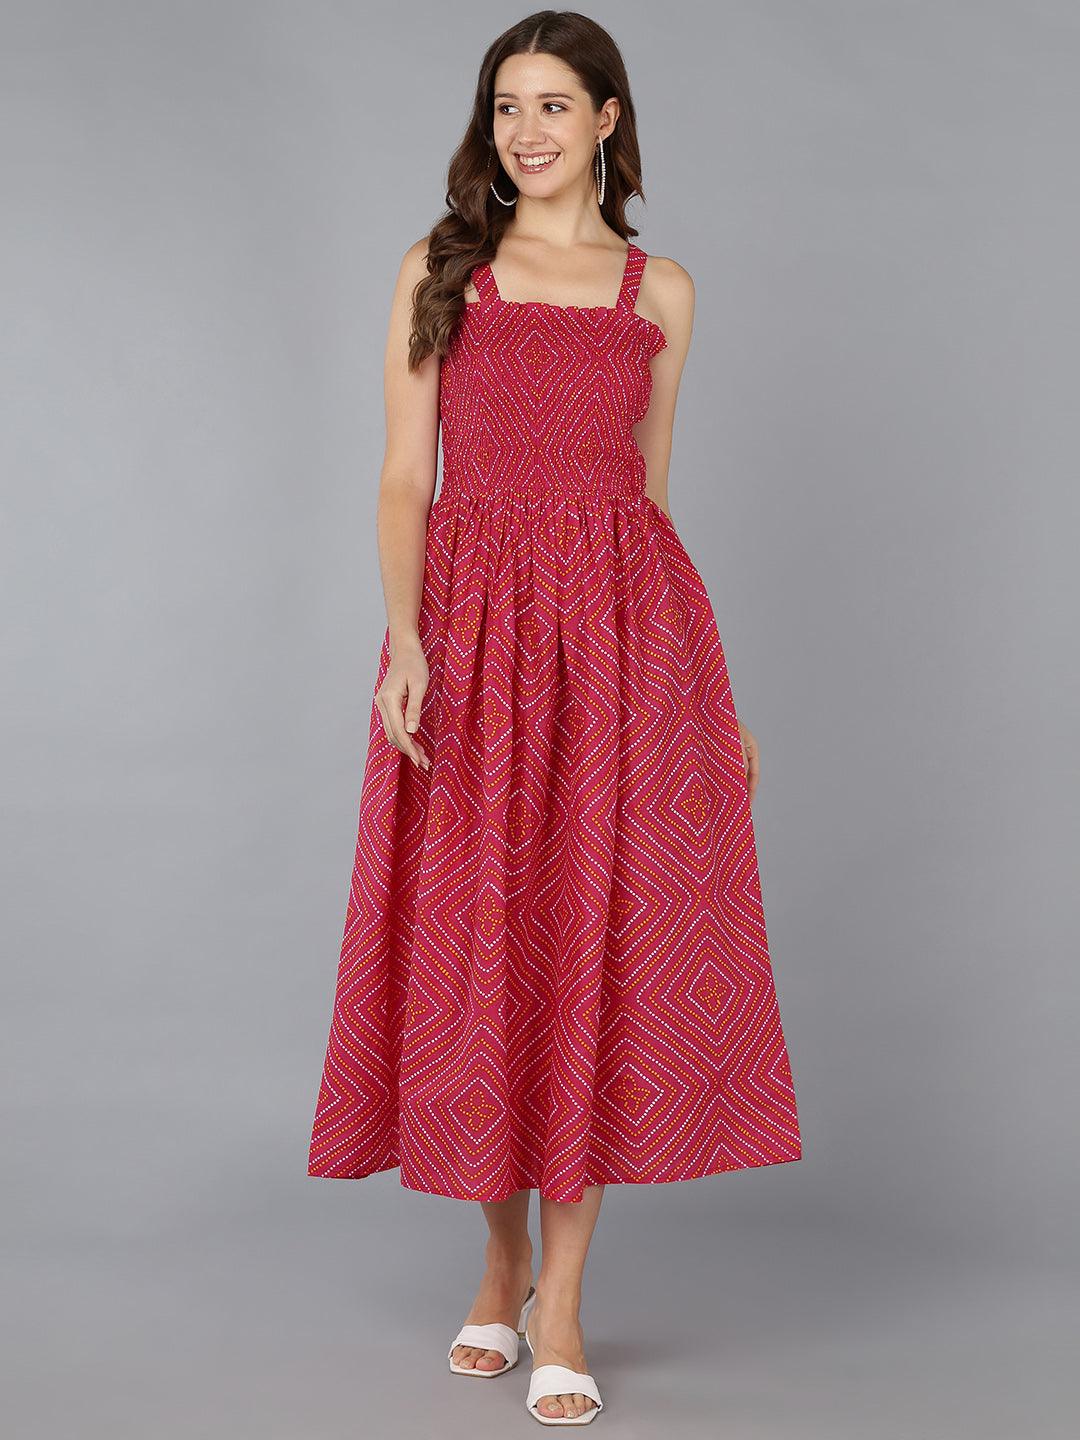 Smocked Pink Bhandhani Dress - Znxclothing